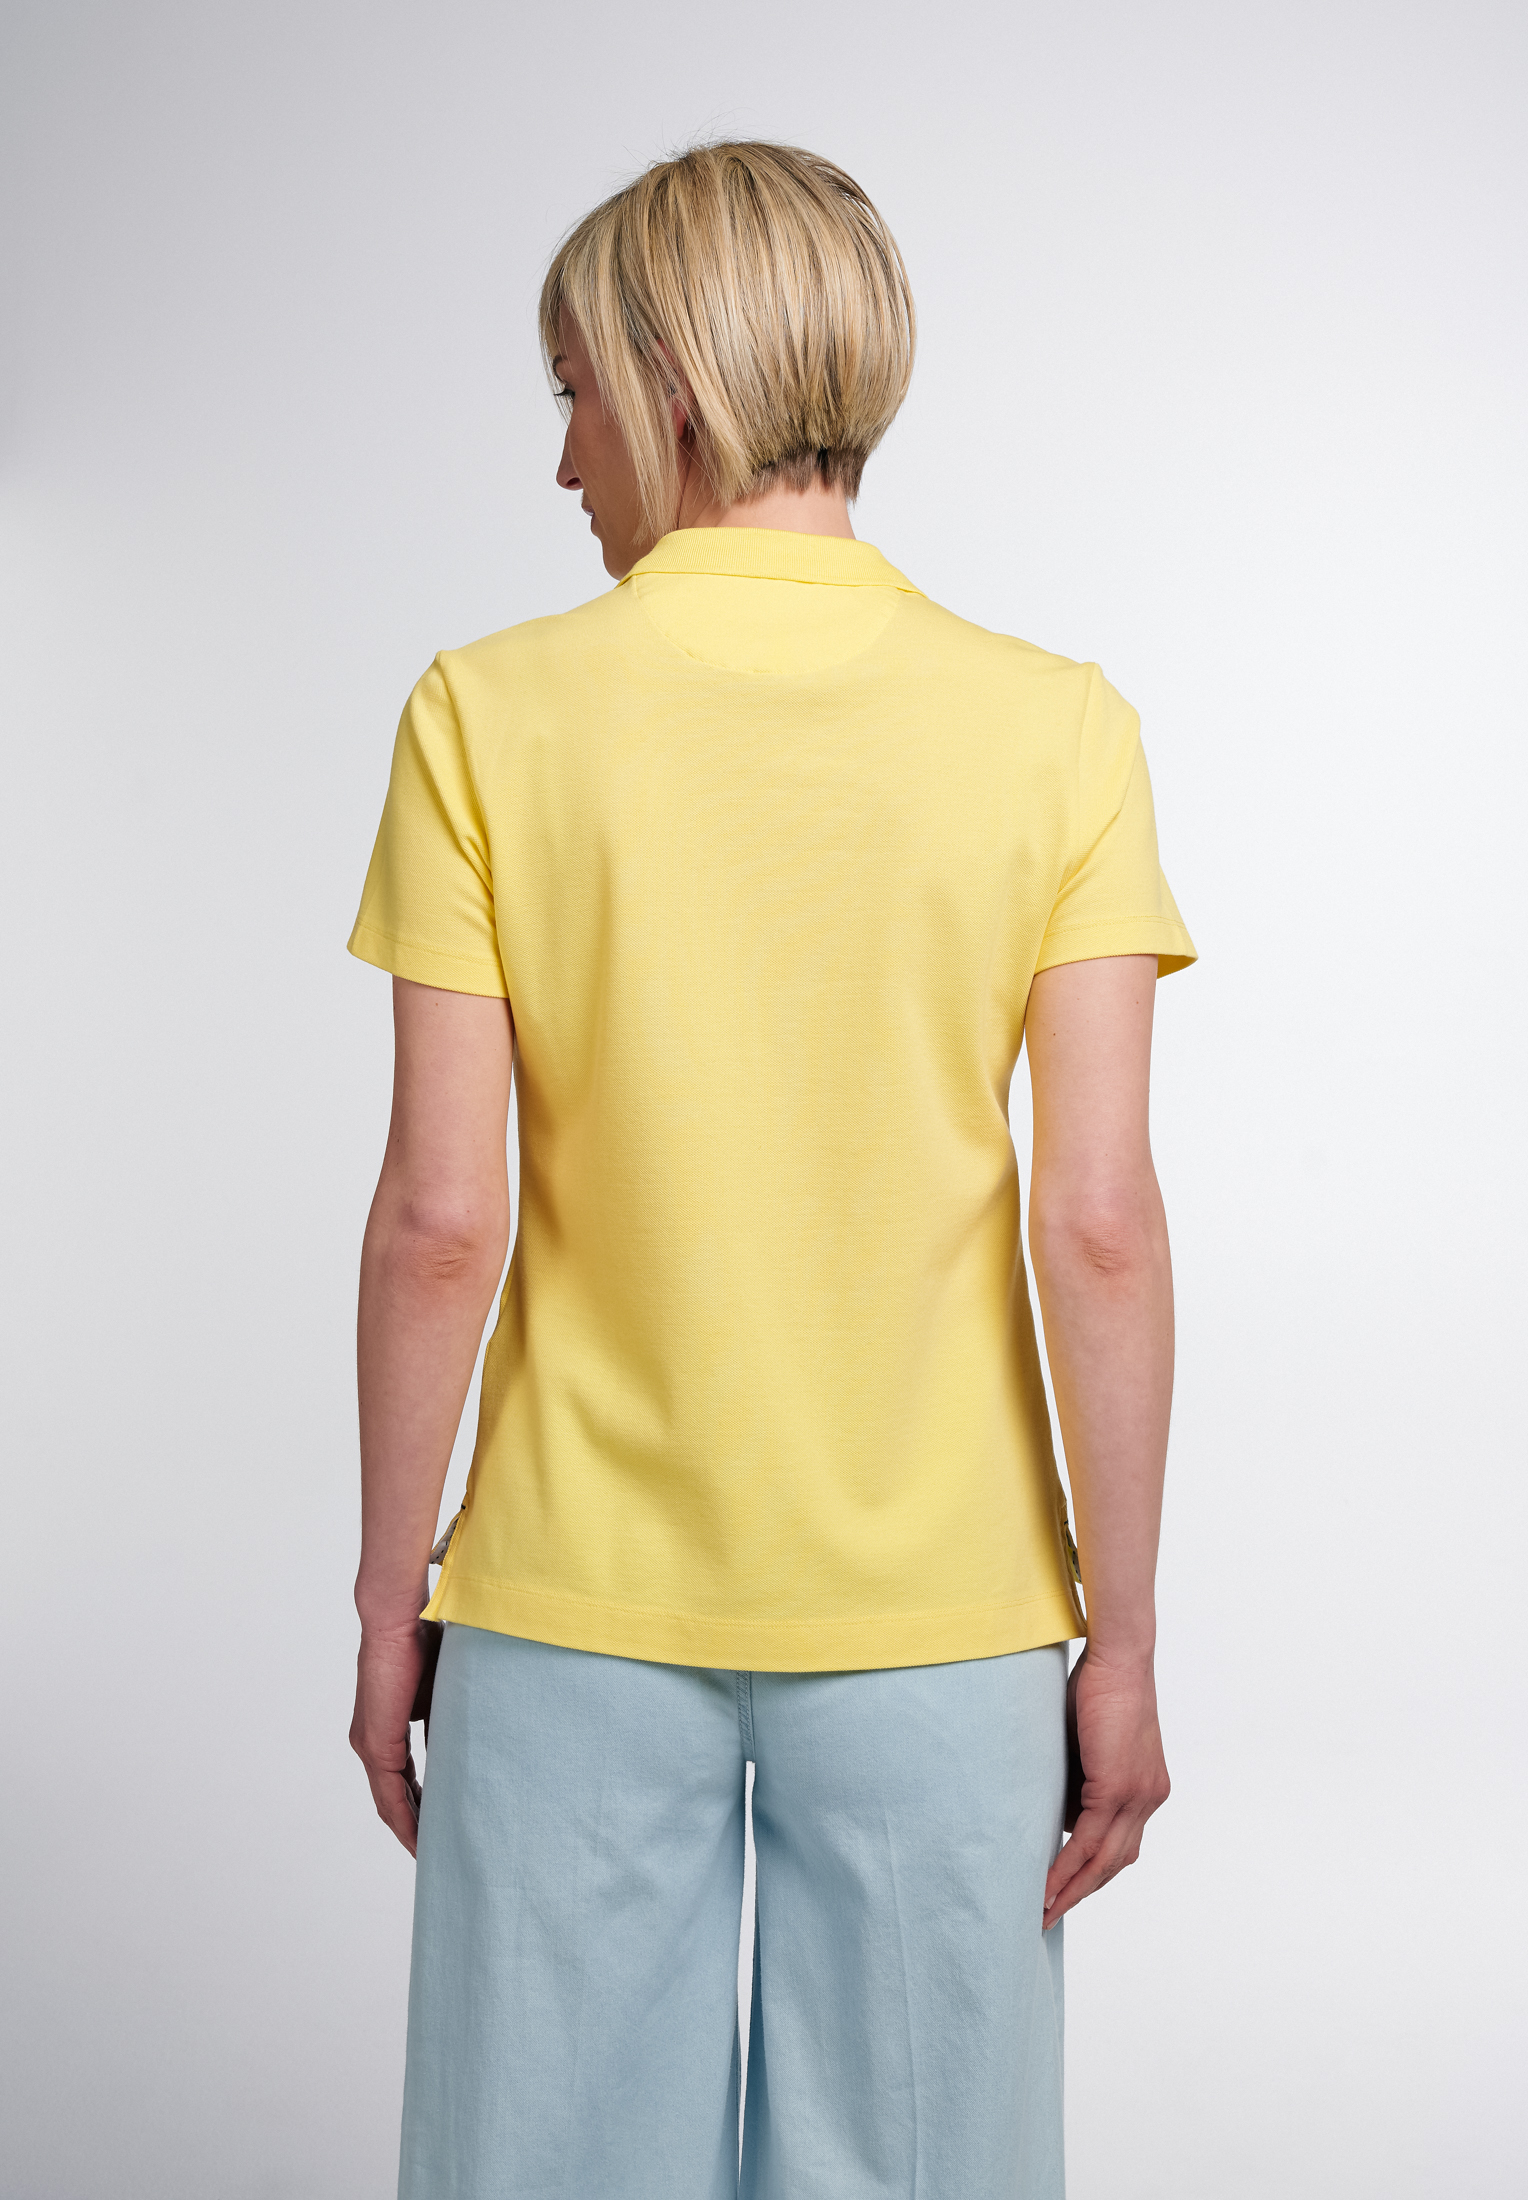 2SP00006-07-01-7XL-1/2 | | gelb Kurzarm unifarben | | Poloshirt 7XL gelb in